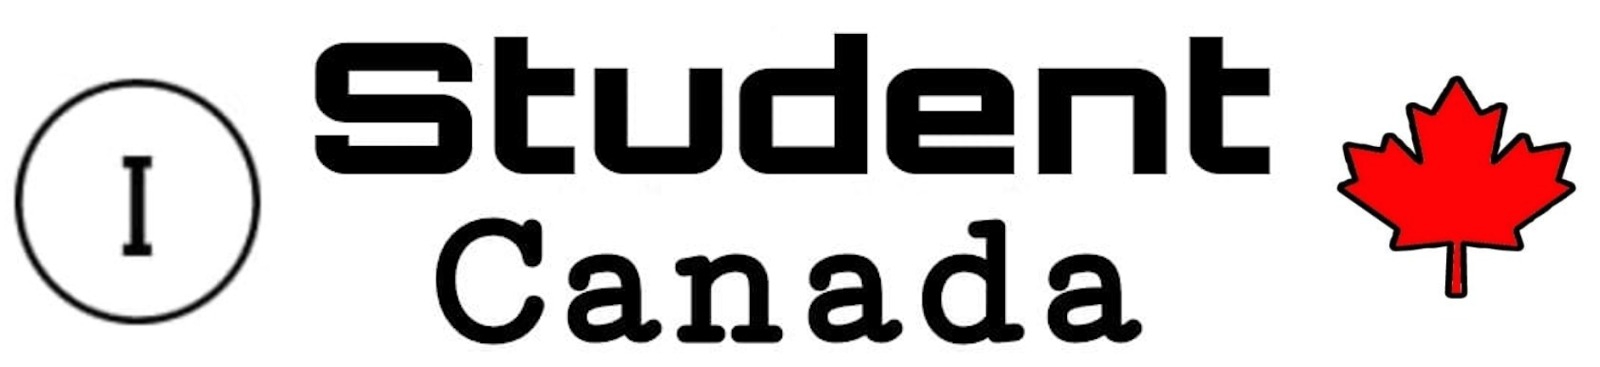 istudentcanada-logo